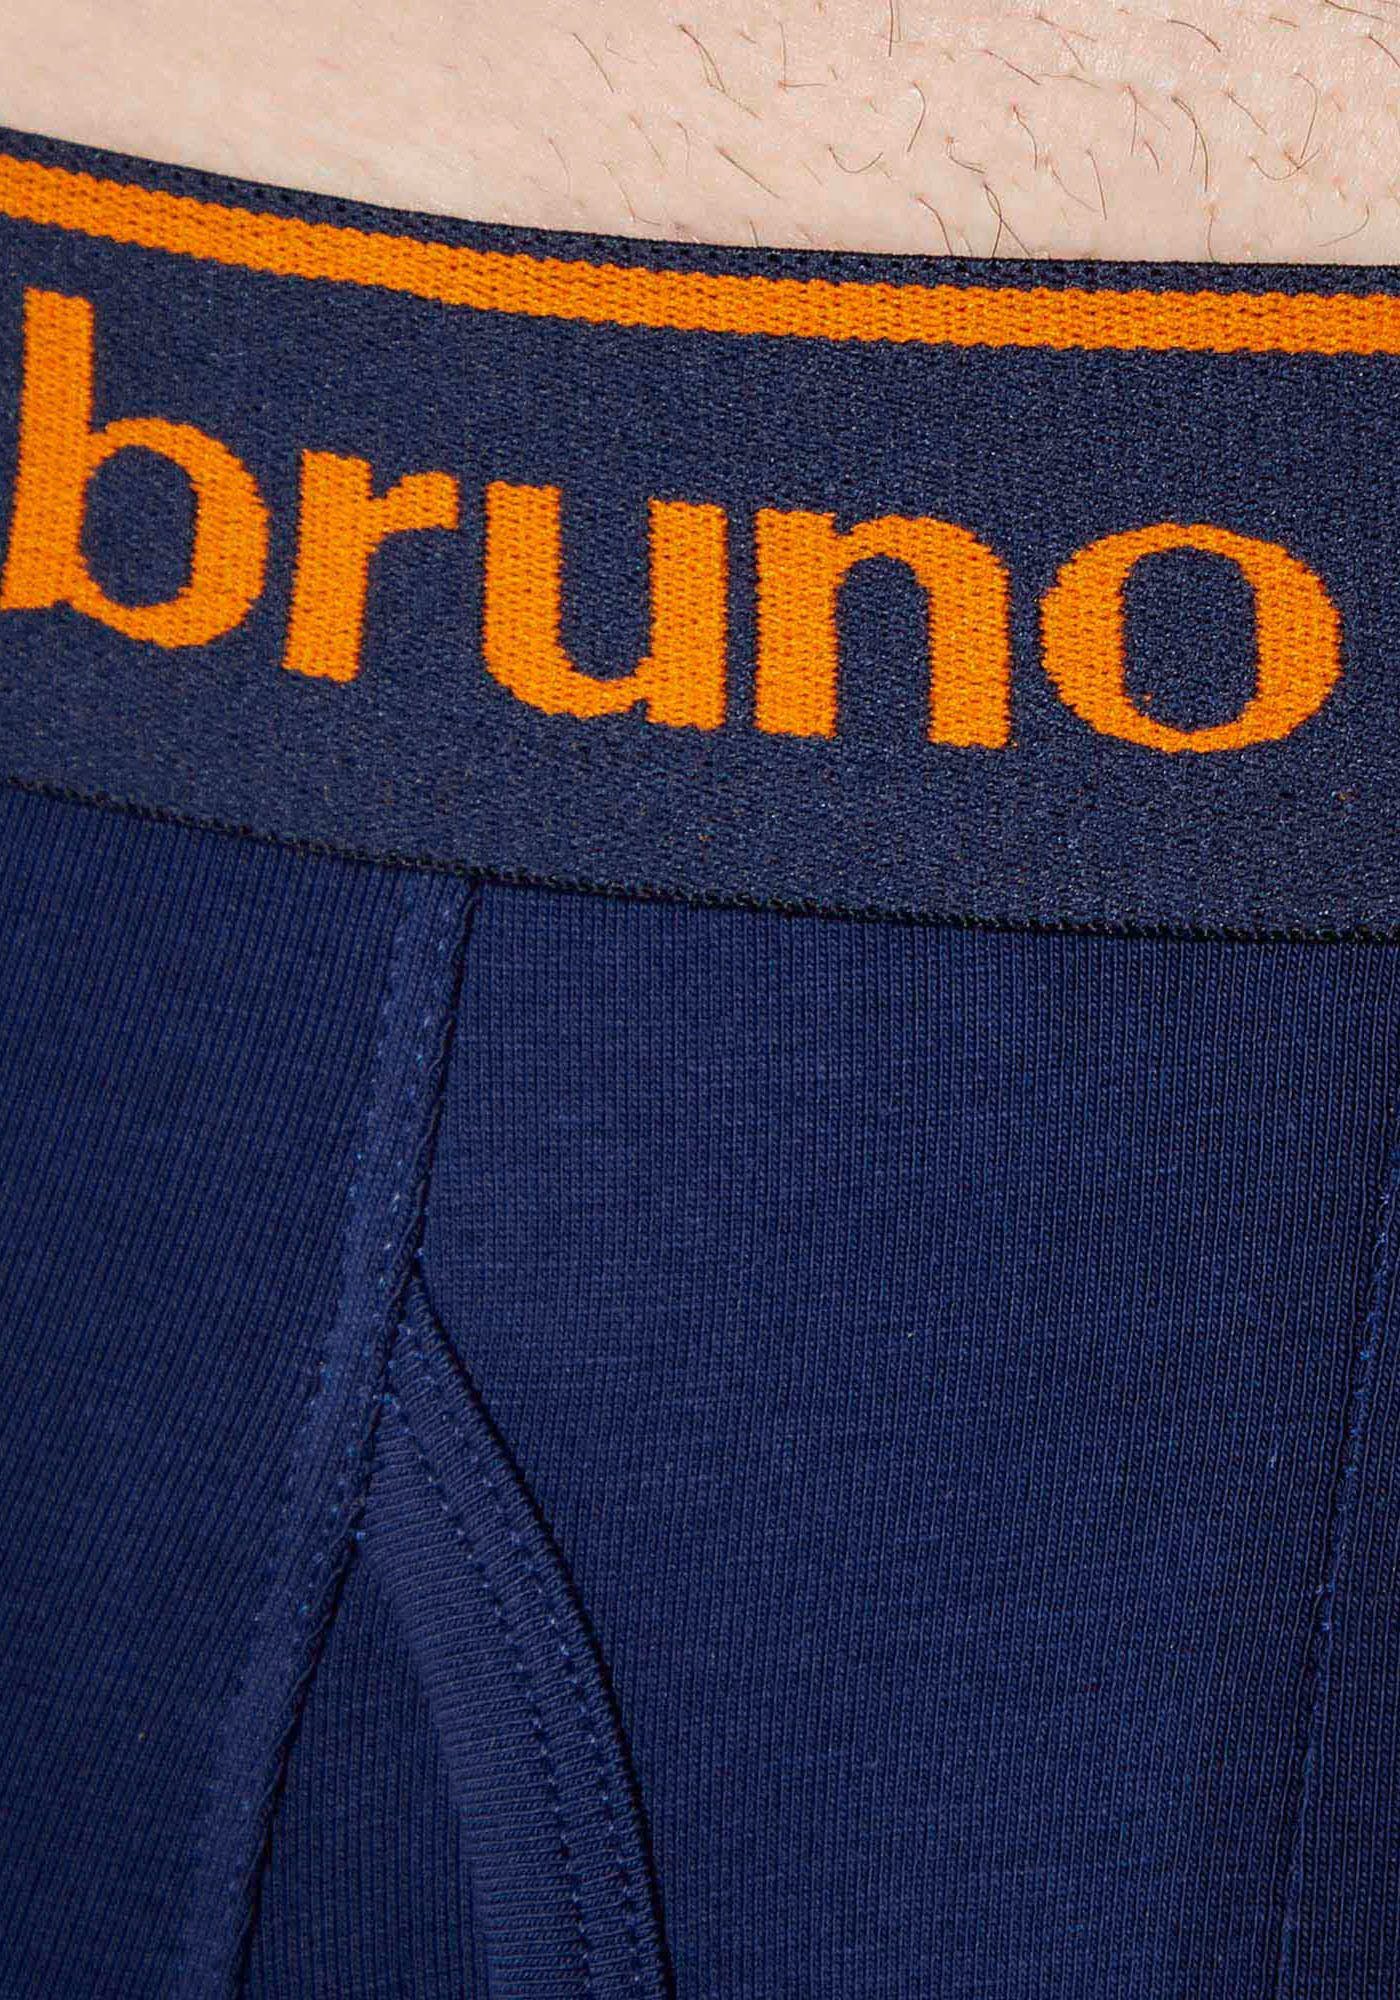 Bruno Banani Details Access Quick Short (Packung, 2Pack blau-schwarz Boxershorts Kontrastfarbene 2-St)